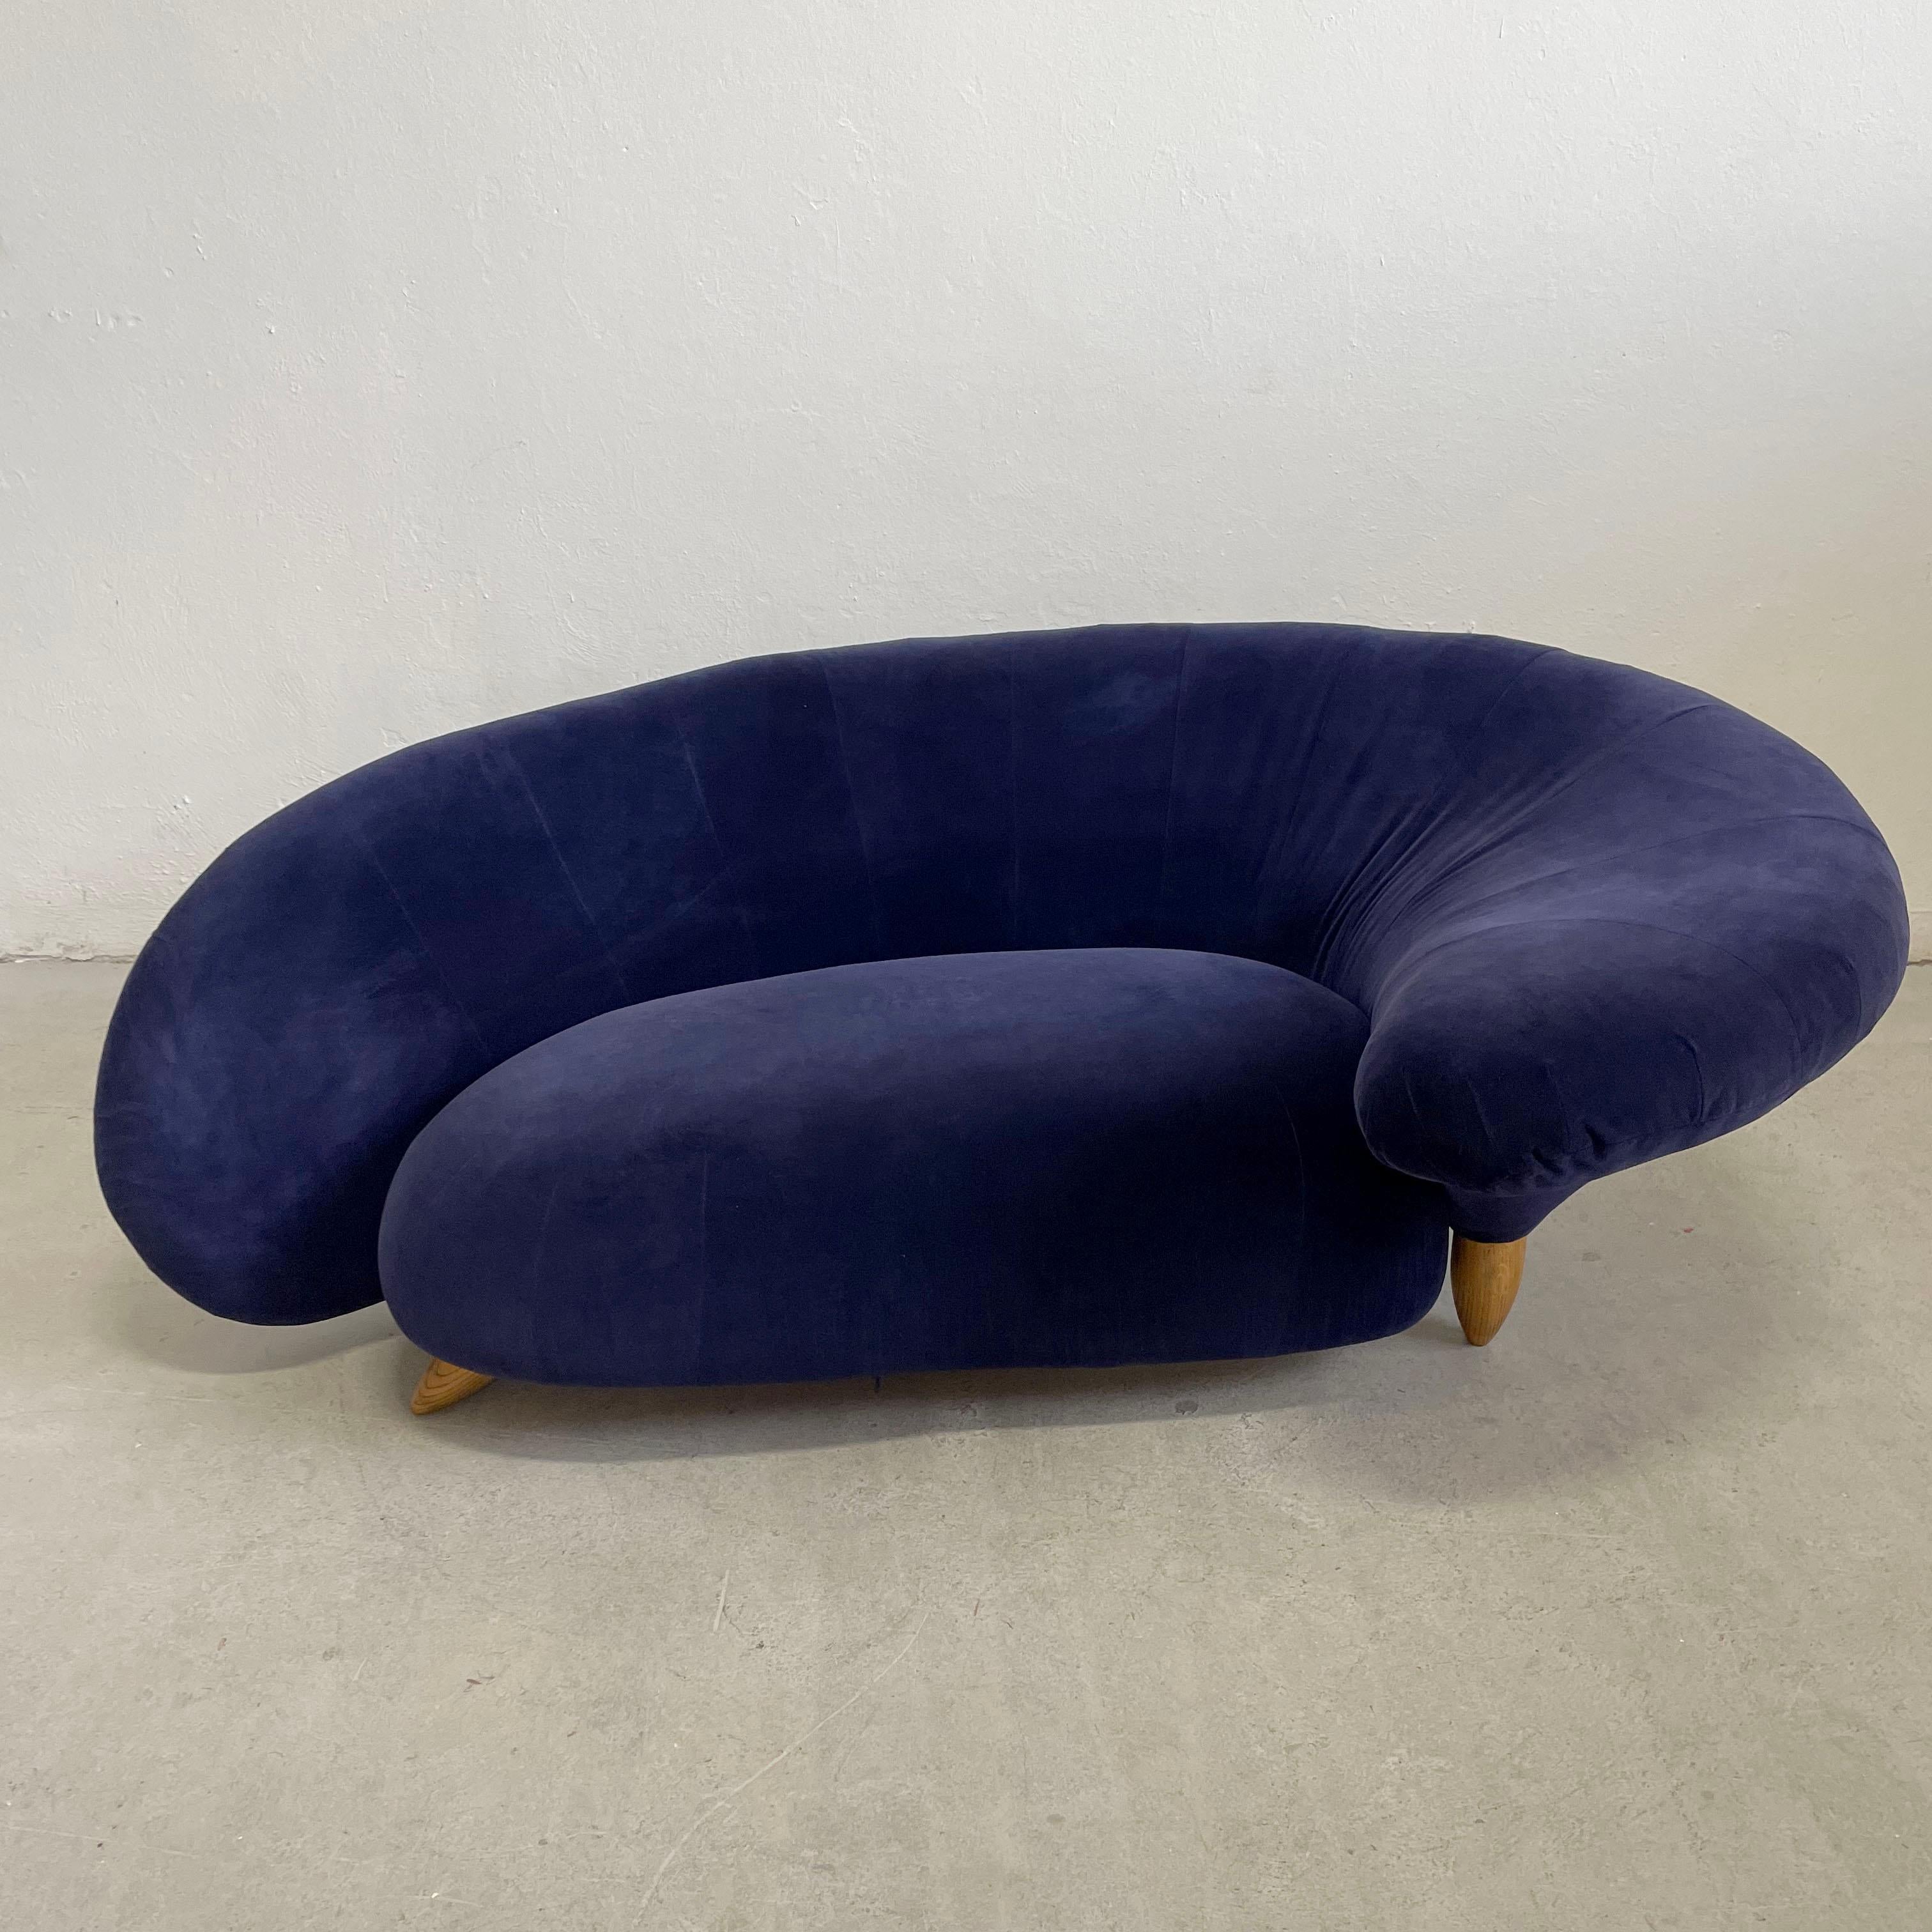 Vintage 20th Century Modern Serpentine Curved Velvet Sofa in Navy Blue Color For Sale 7